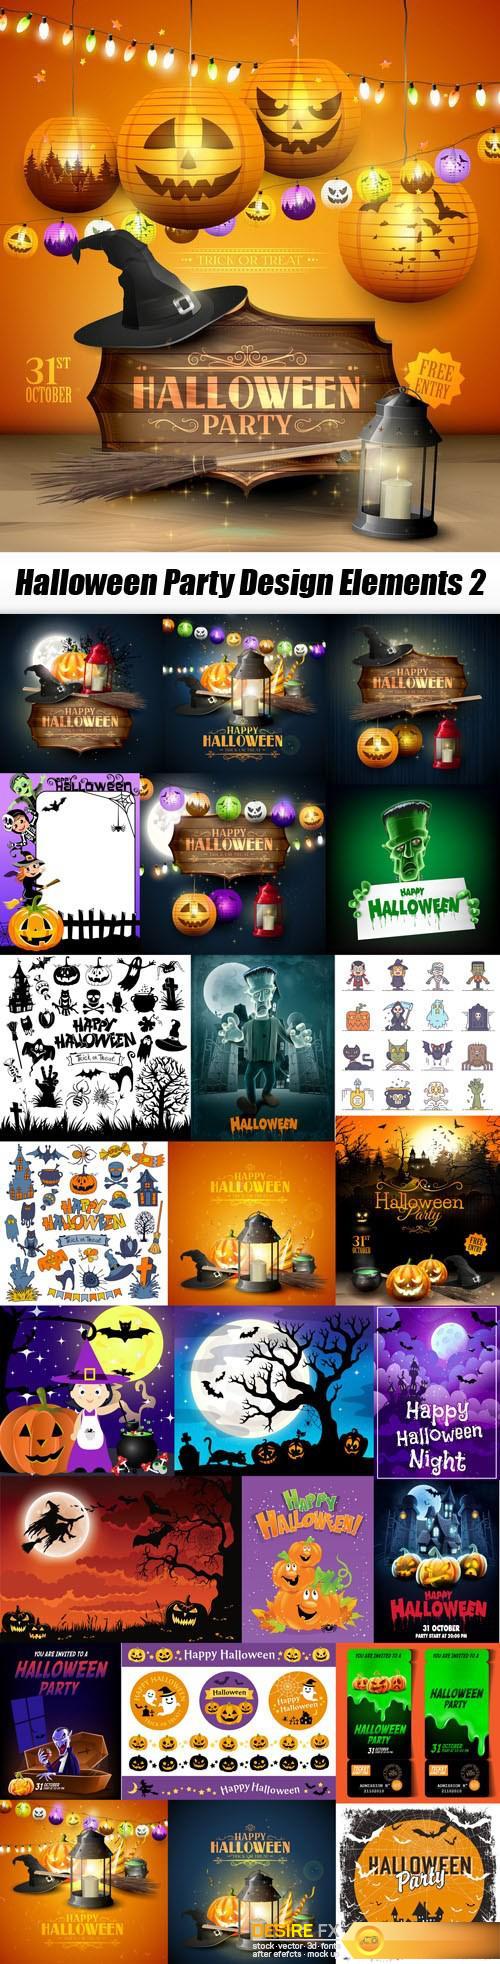 Halloween Party Design Elements 2 